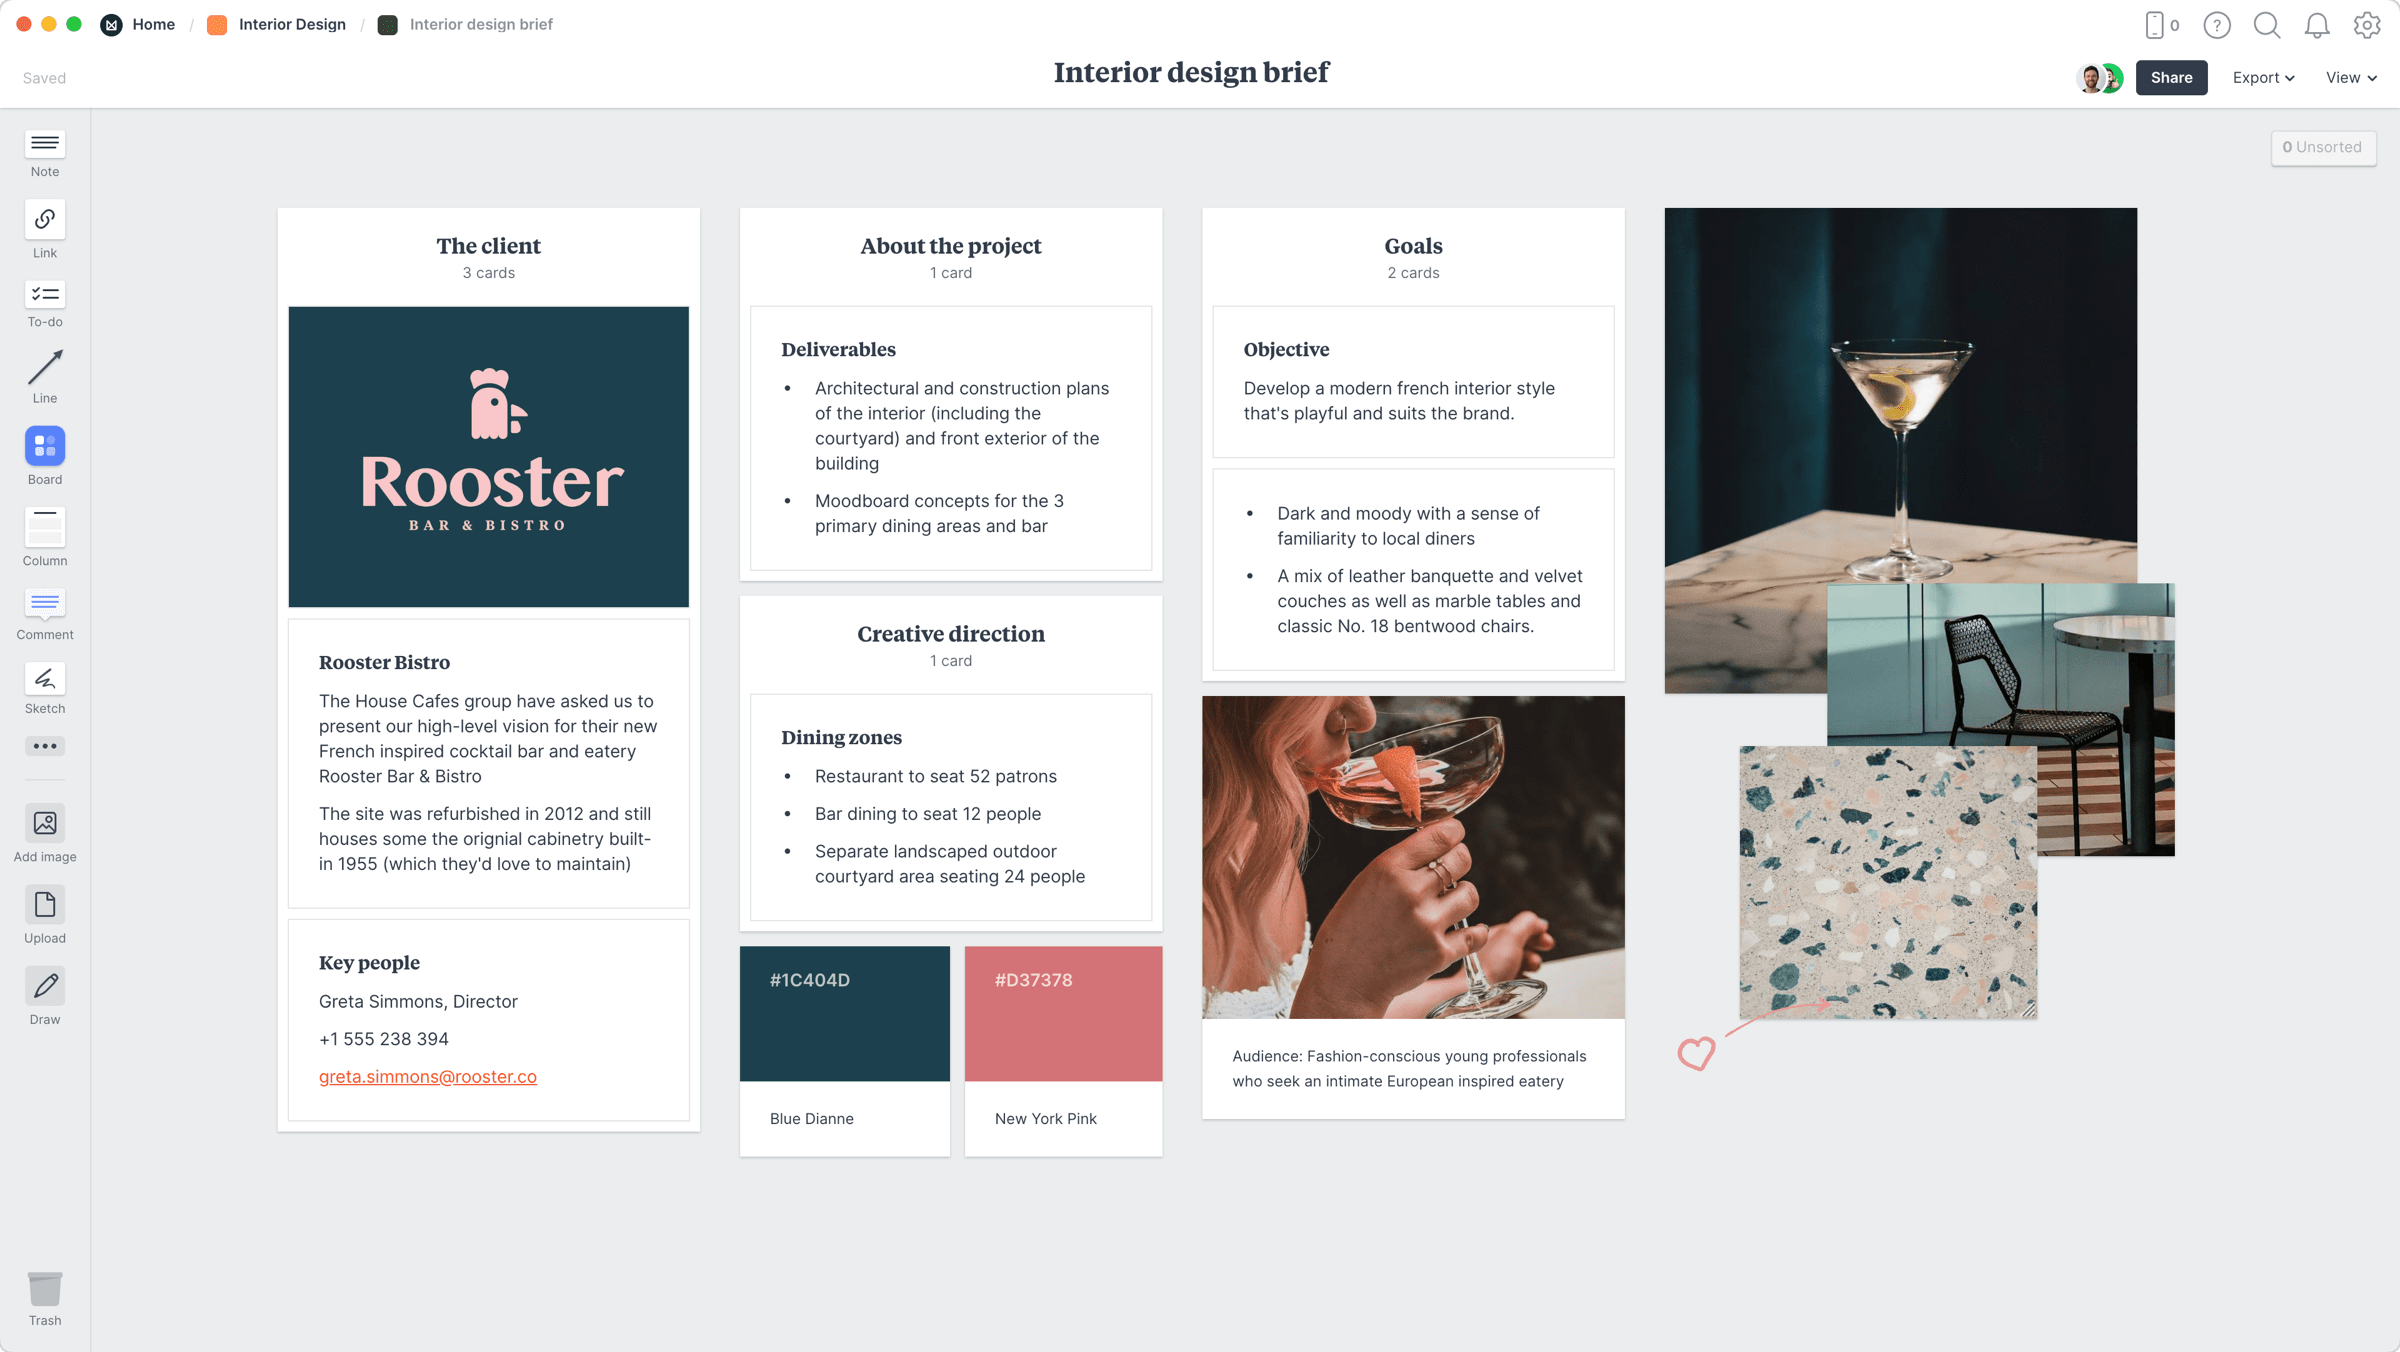 Interior Design Brief Template, within the Milanote app